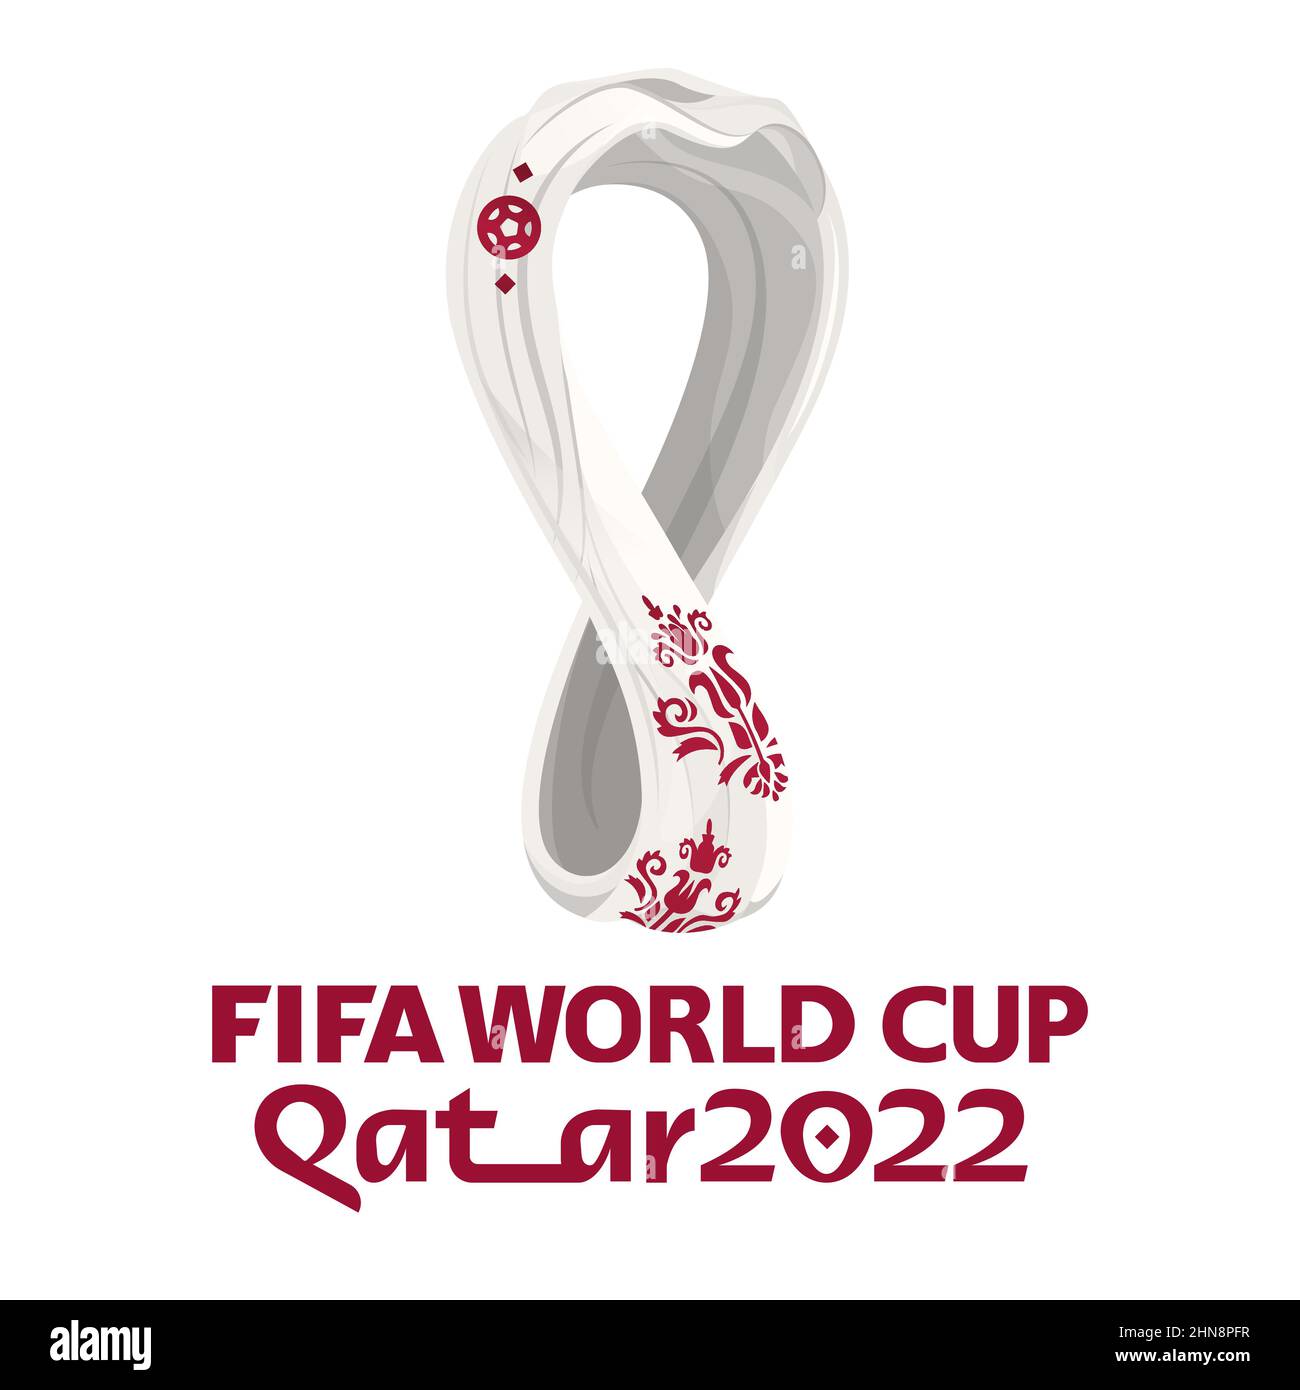 Vinnytsia, Ukraine - 14. Februar 2022: Logo der FIFA FUSSBALL-WELTMEISTERSCHAFT 2022. Redaktionelle Illustration Stock Vektor